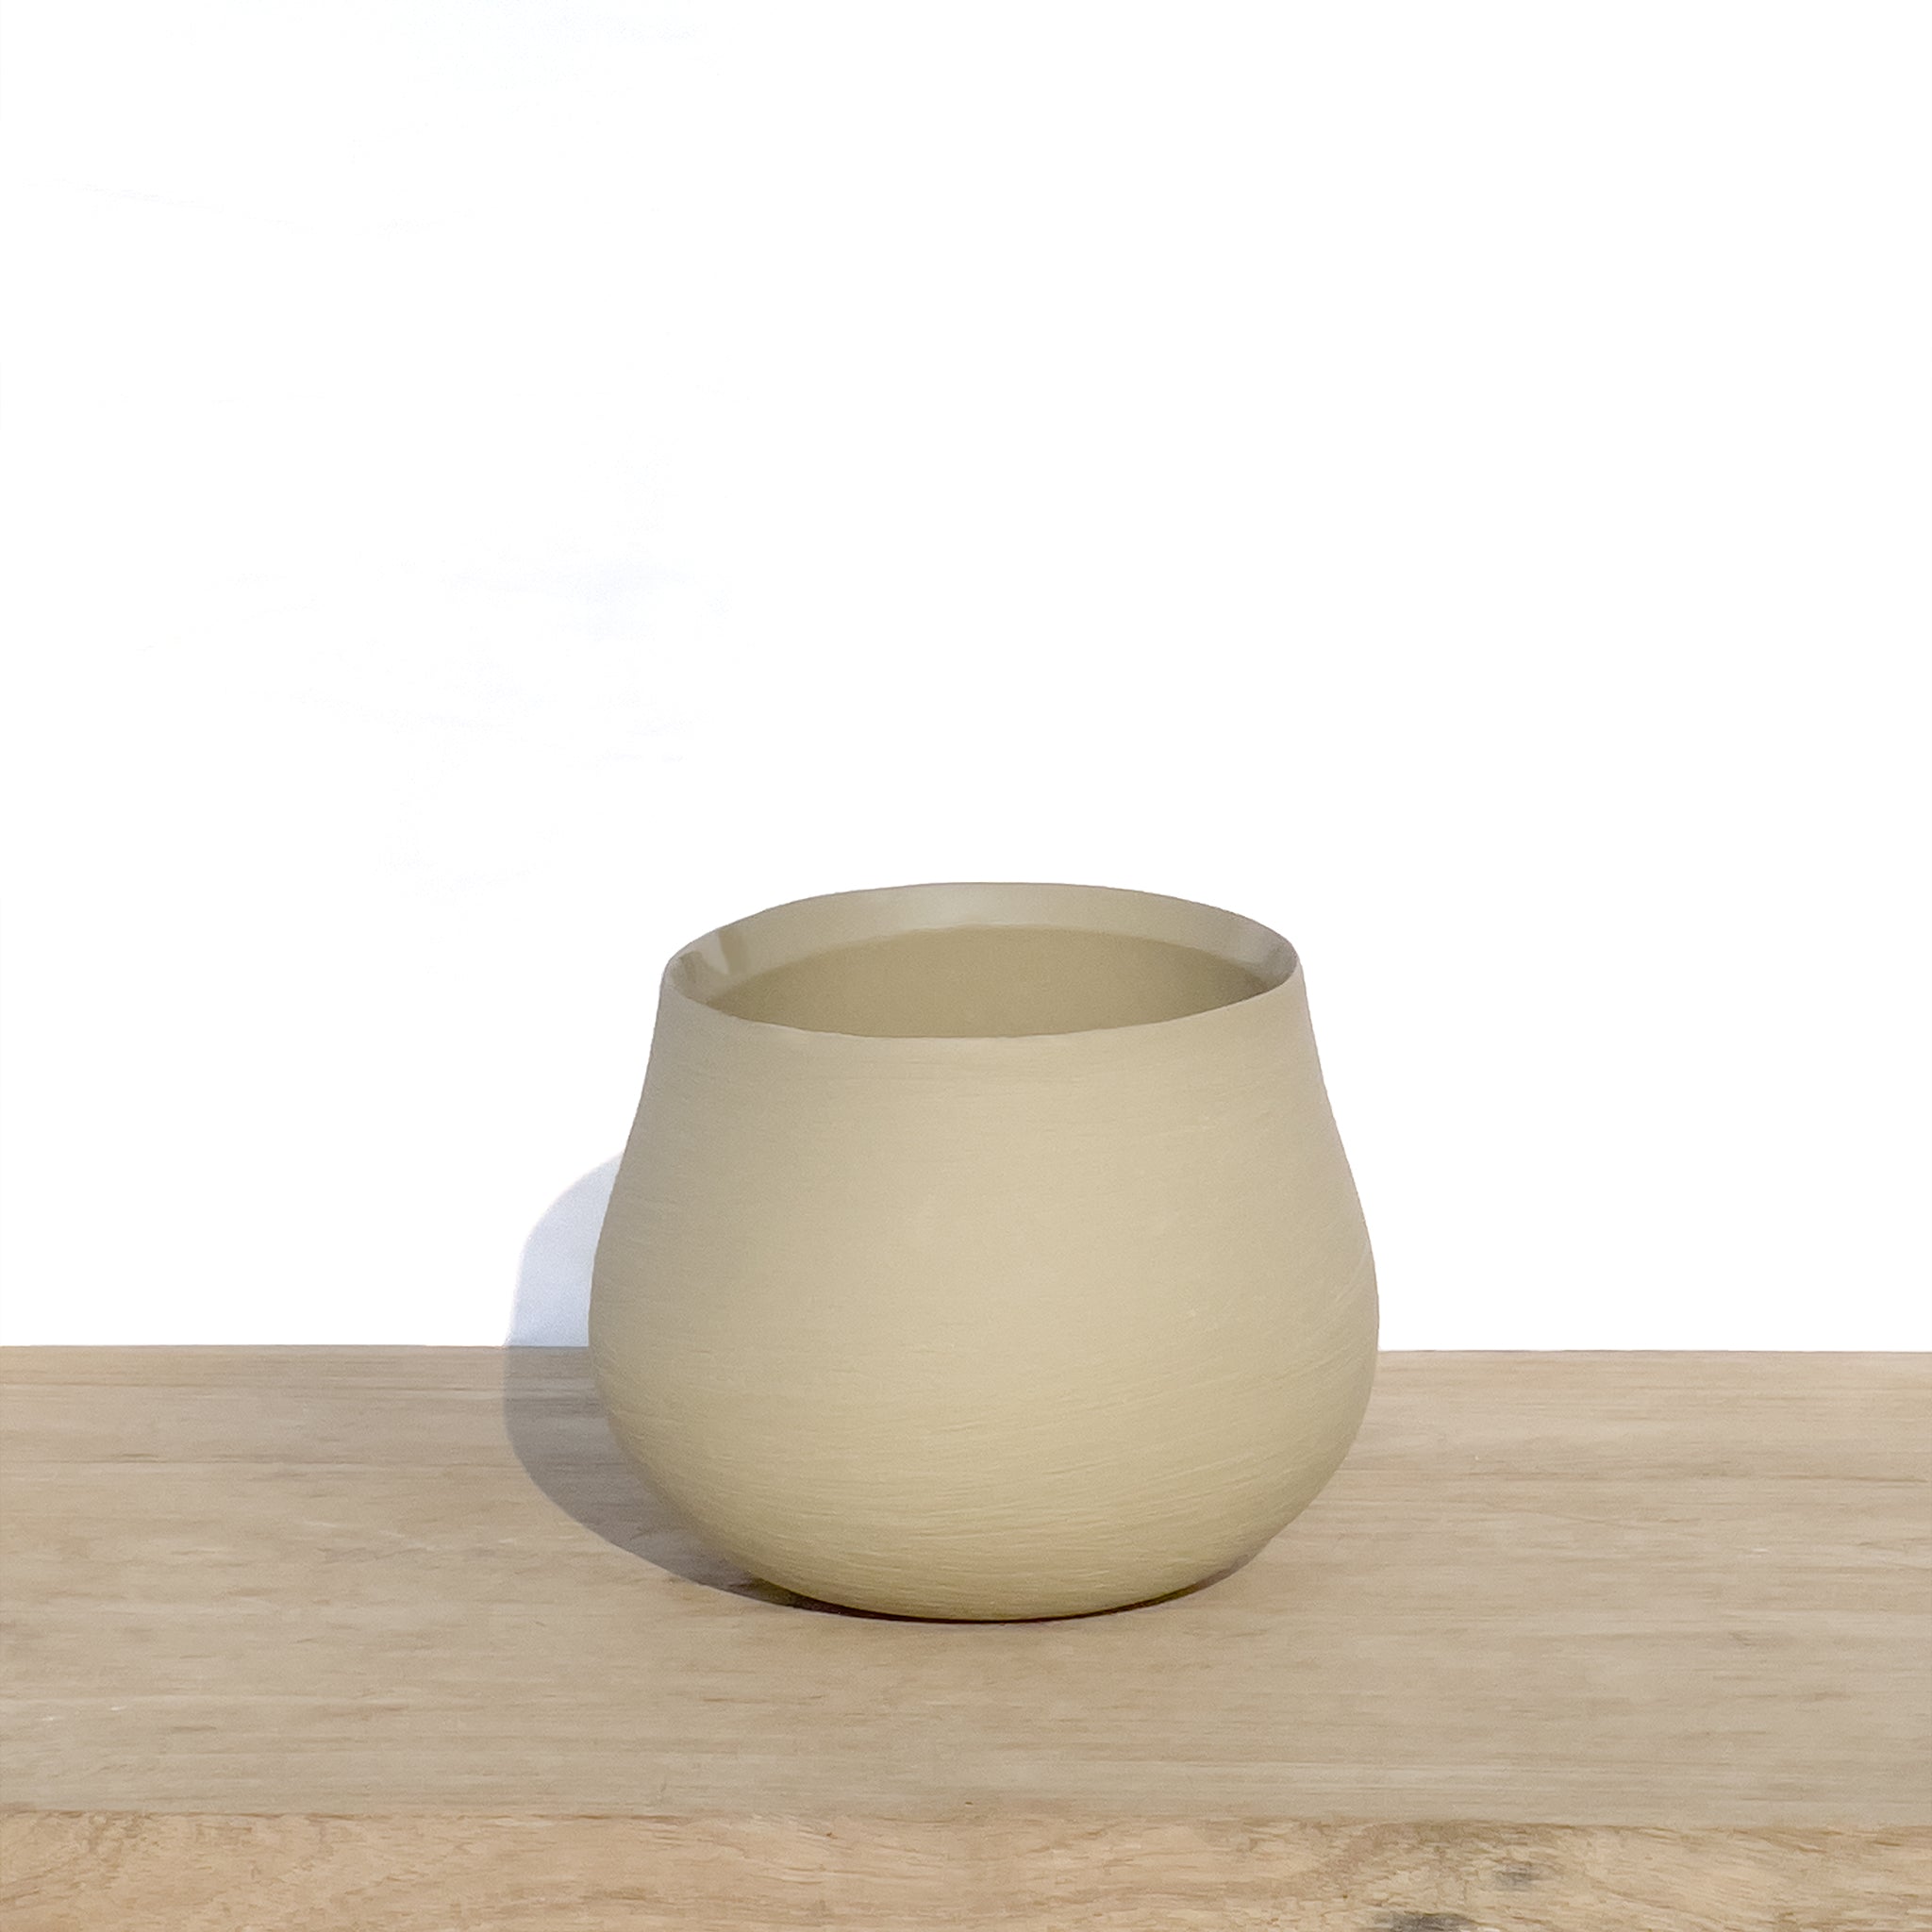 土灰色陶瓷盆 | Clay pottery planter